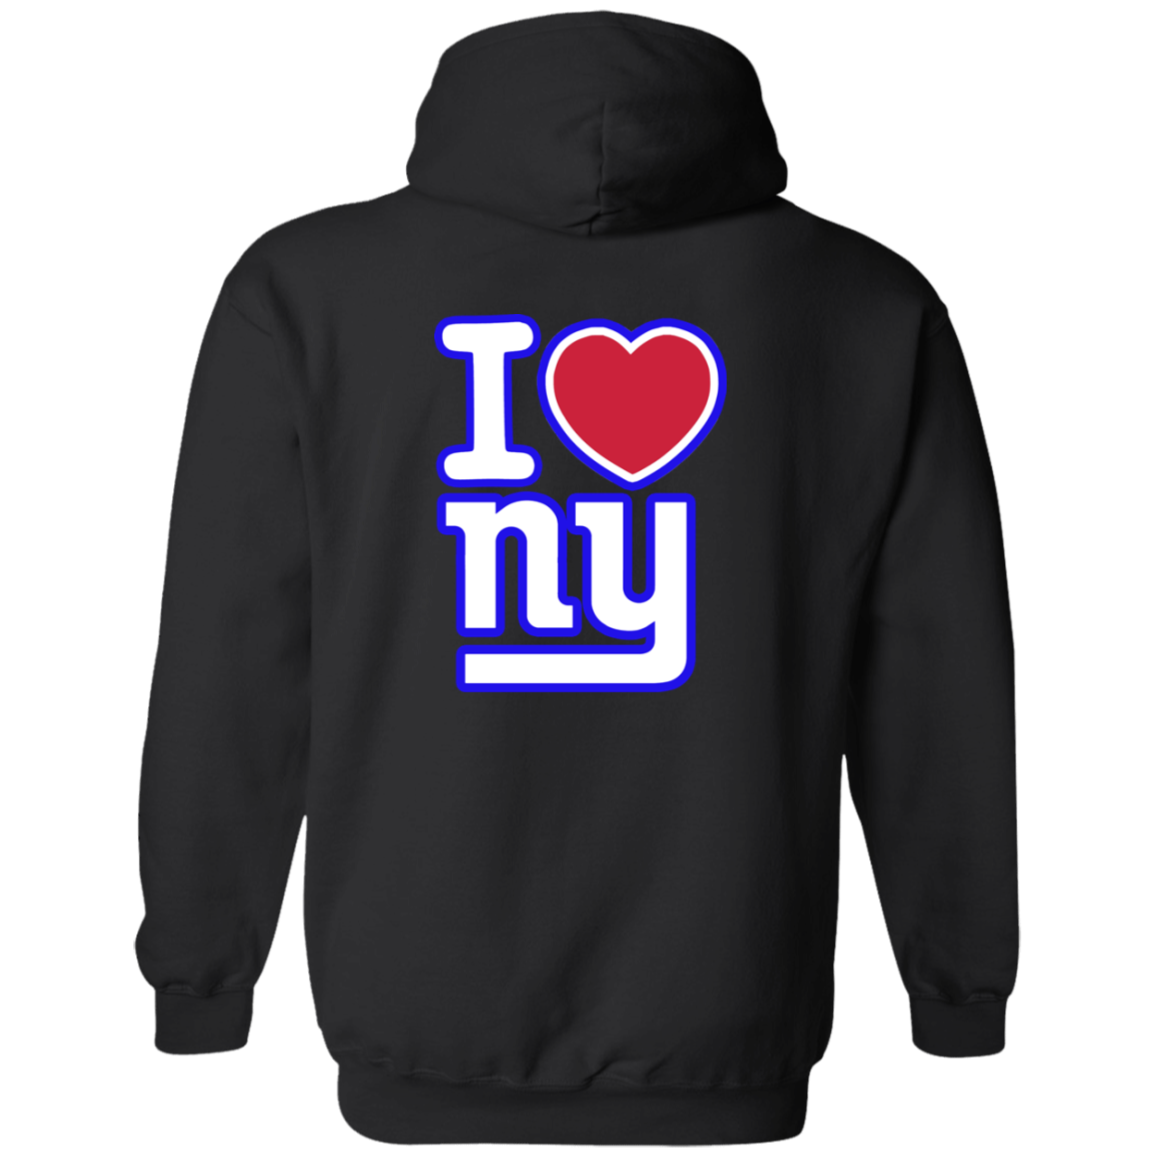 ArtichokeUSA Custom Design. I heart New York Giants. NY Giants Football Fan Art. Zip Up Hooded Sweatshirt